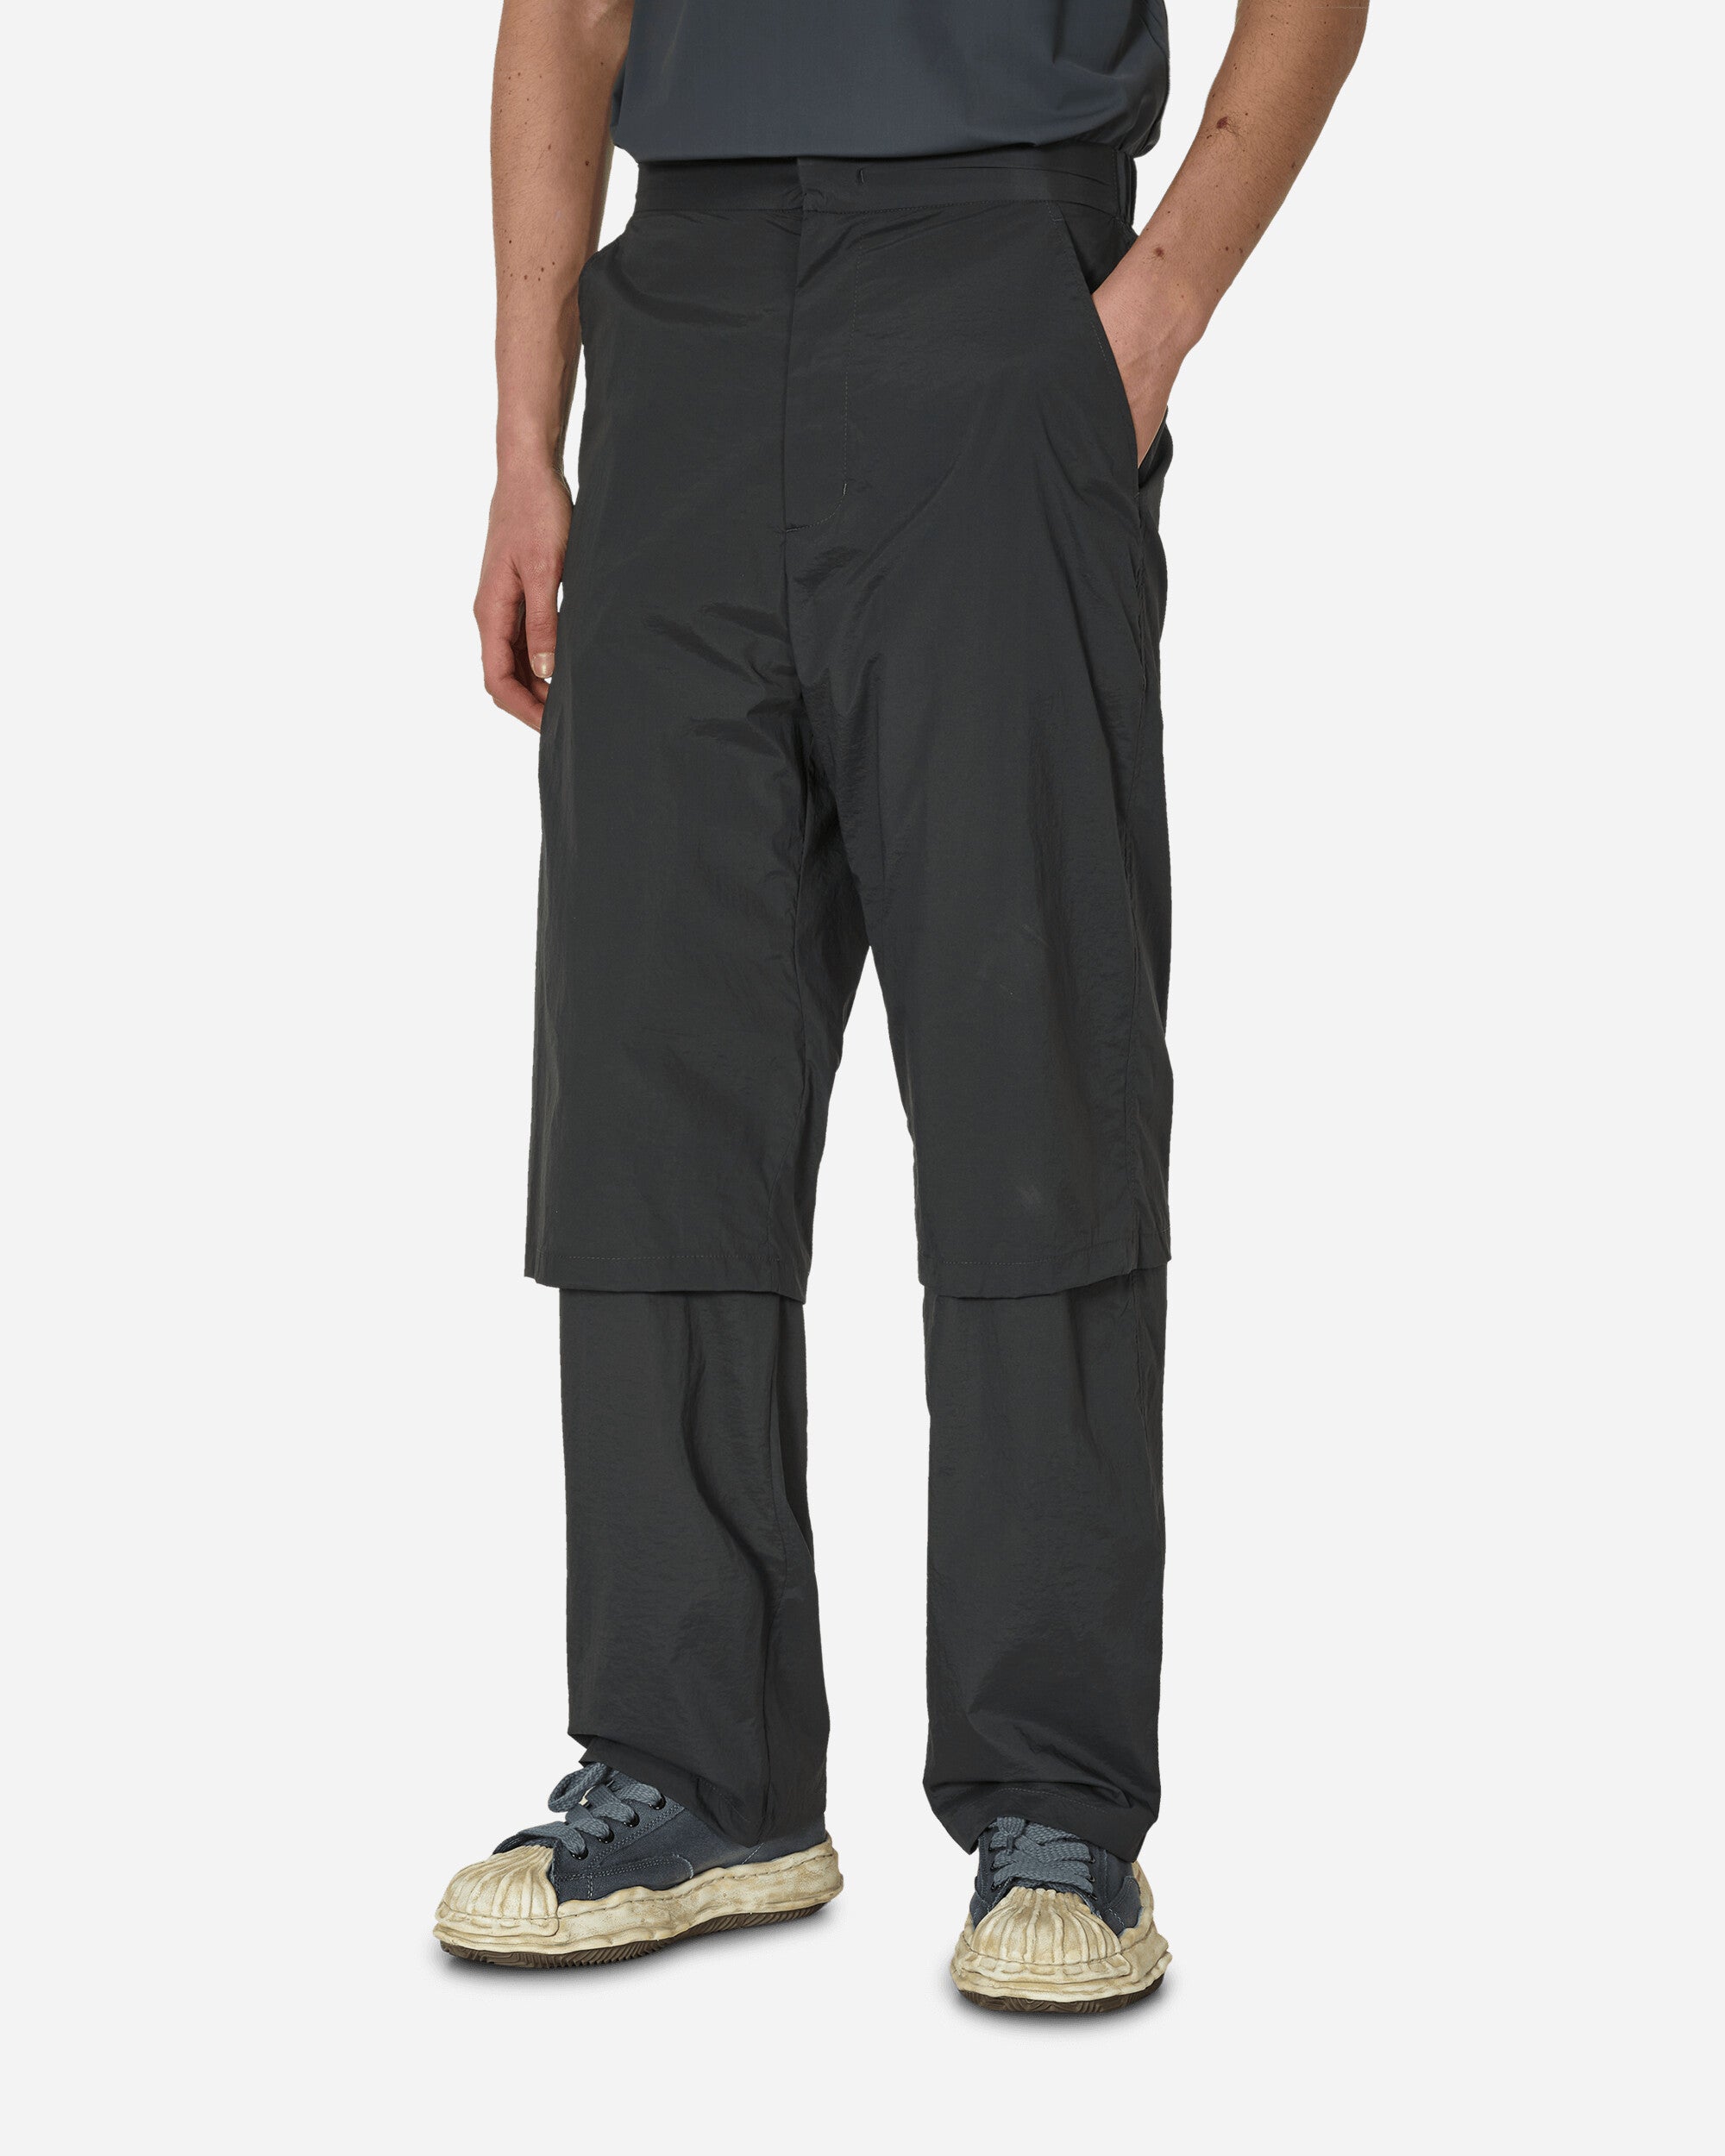 AMOMENTO Sheer Layered Pants Charcoal - Slam Jam® Official Store